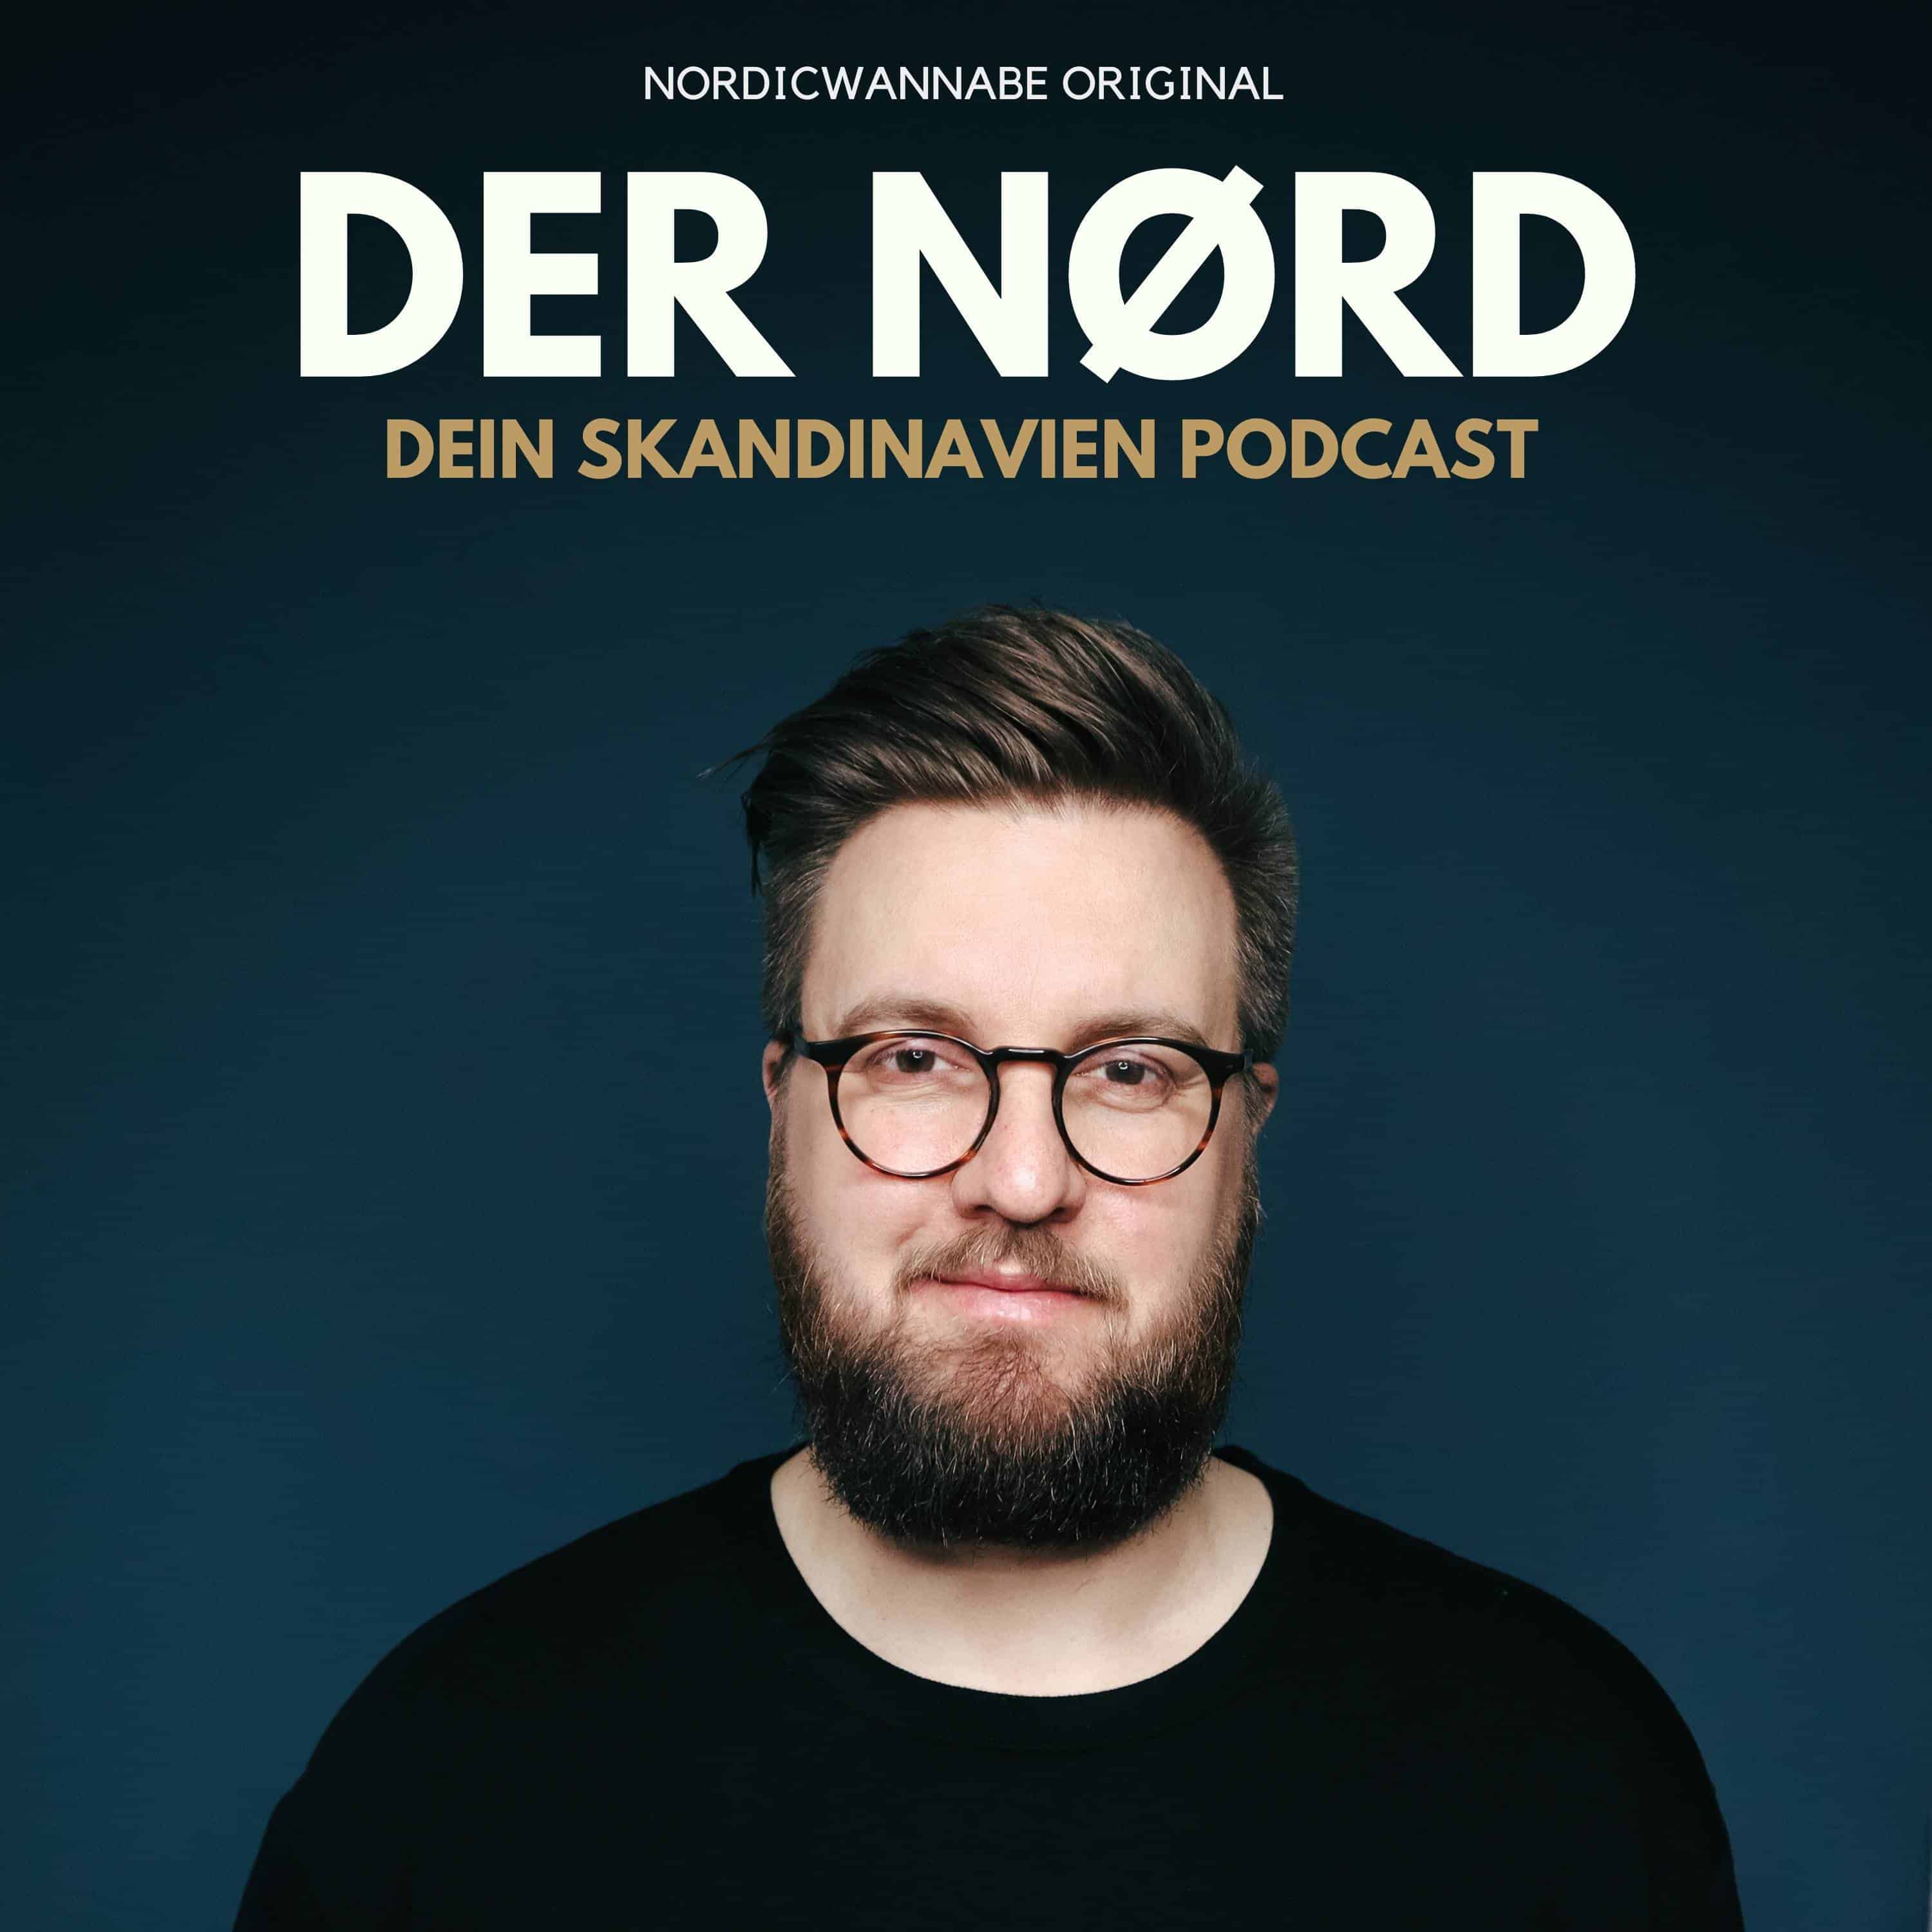 Skandinavien-Podcast, Podcast Trend 2020, NordicWannabe, Der Nørd